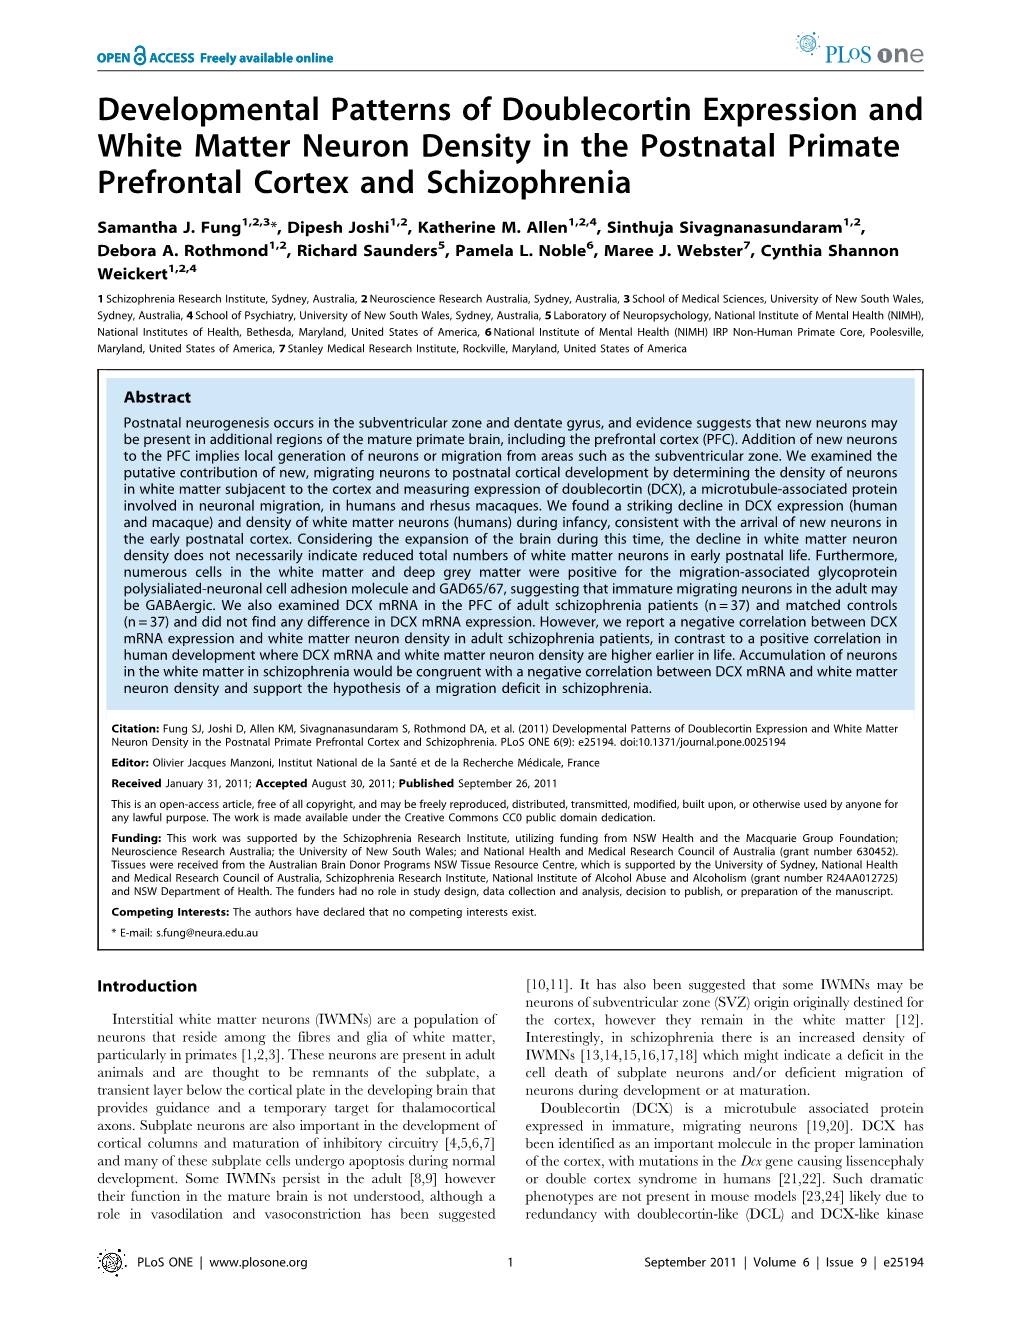 Developmental Patterns of Doublecortin Expression and White Matter Neuron Density in the Postnatal Primate Prefrontal Cortex and Schizophrenia